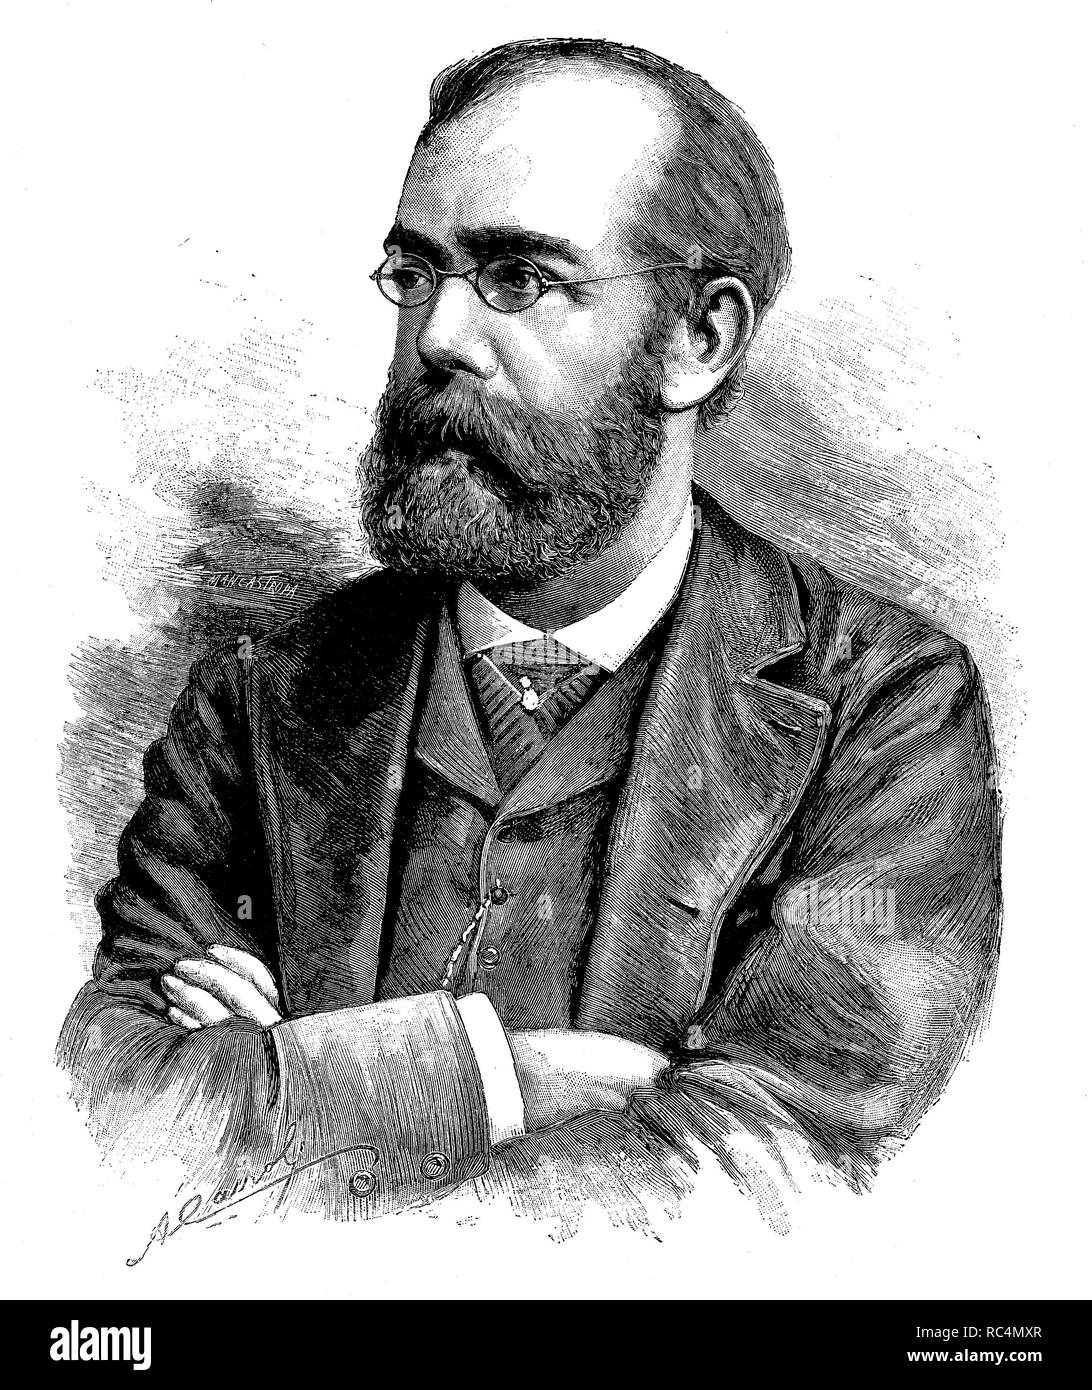 Robert Koch (1843-1910). Microbiologiste allemand, prix Nobel de médecine en 1905. La gravure en 1890. Banque D'Images